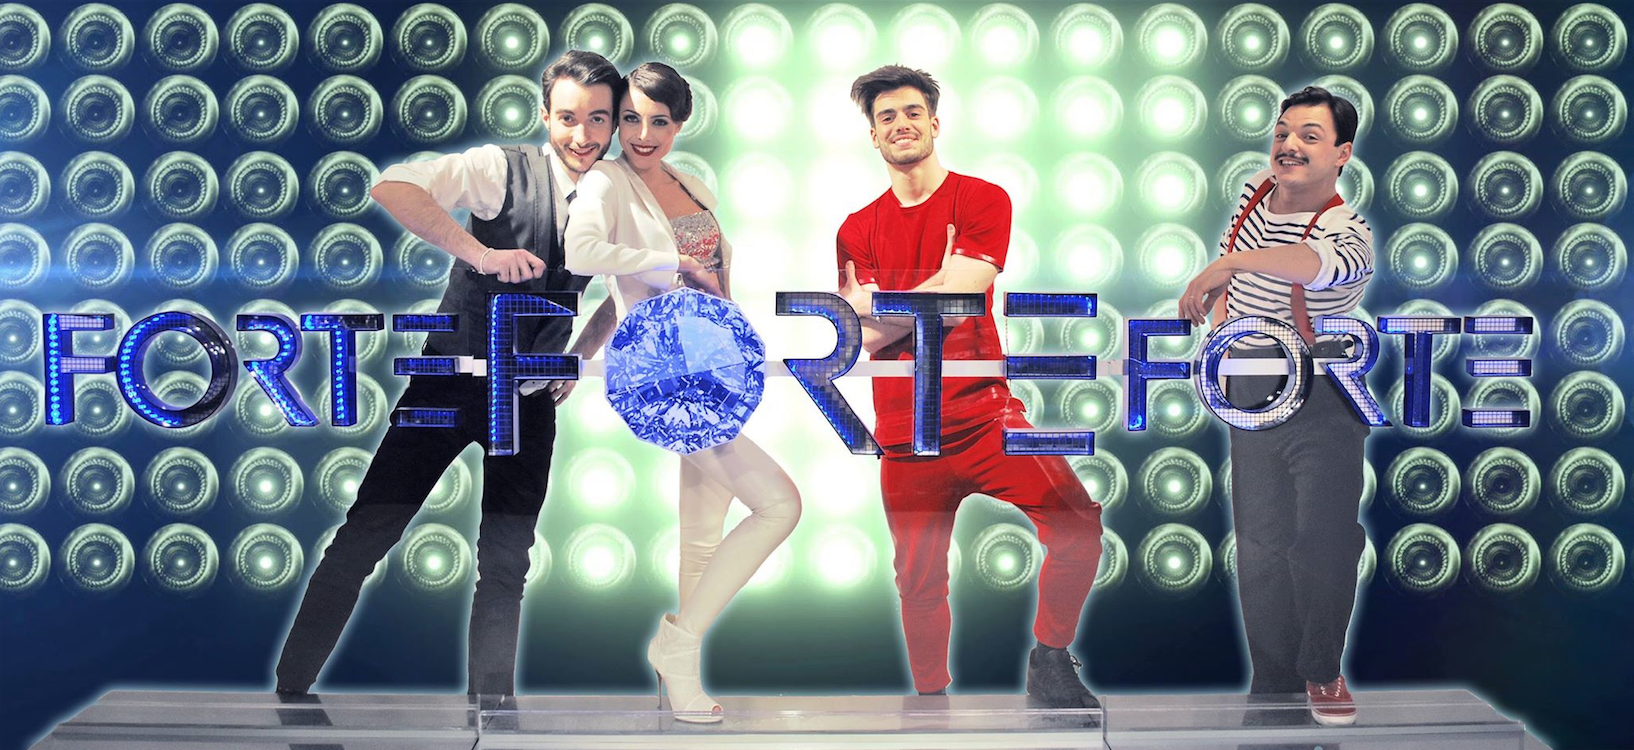 Forte Forte Forte (Talent TV)